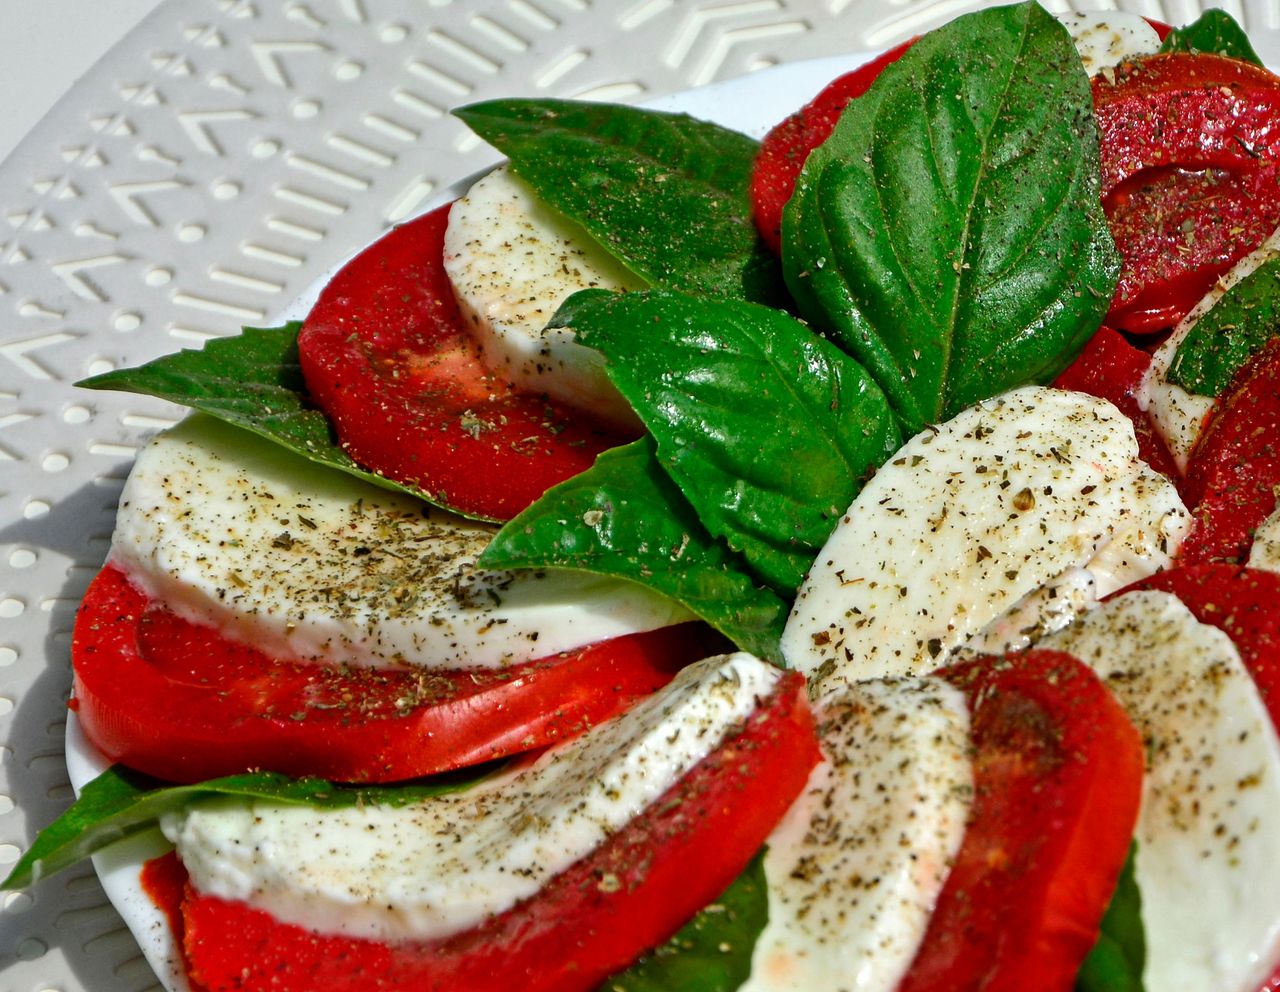 Italian classic gets fruity twist: Strawberry caprese salad debuts